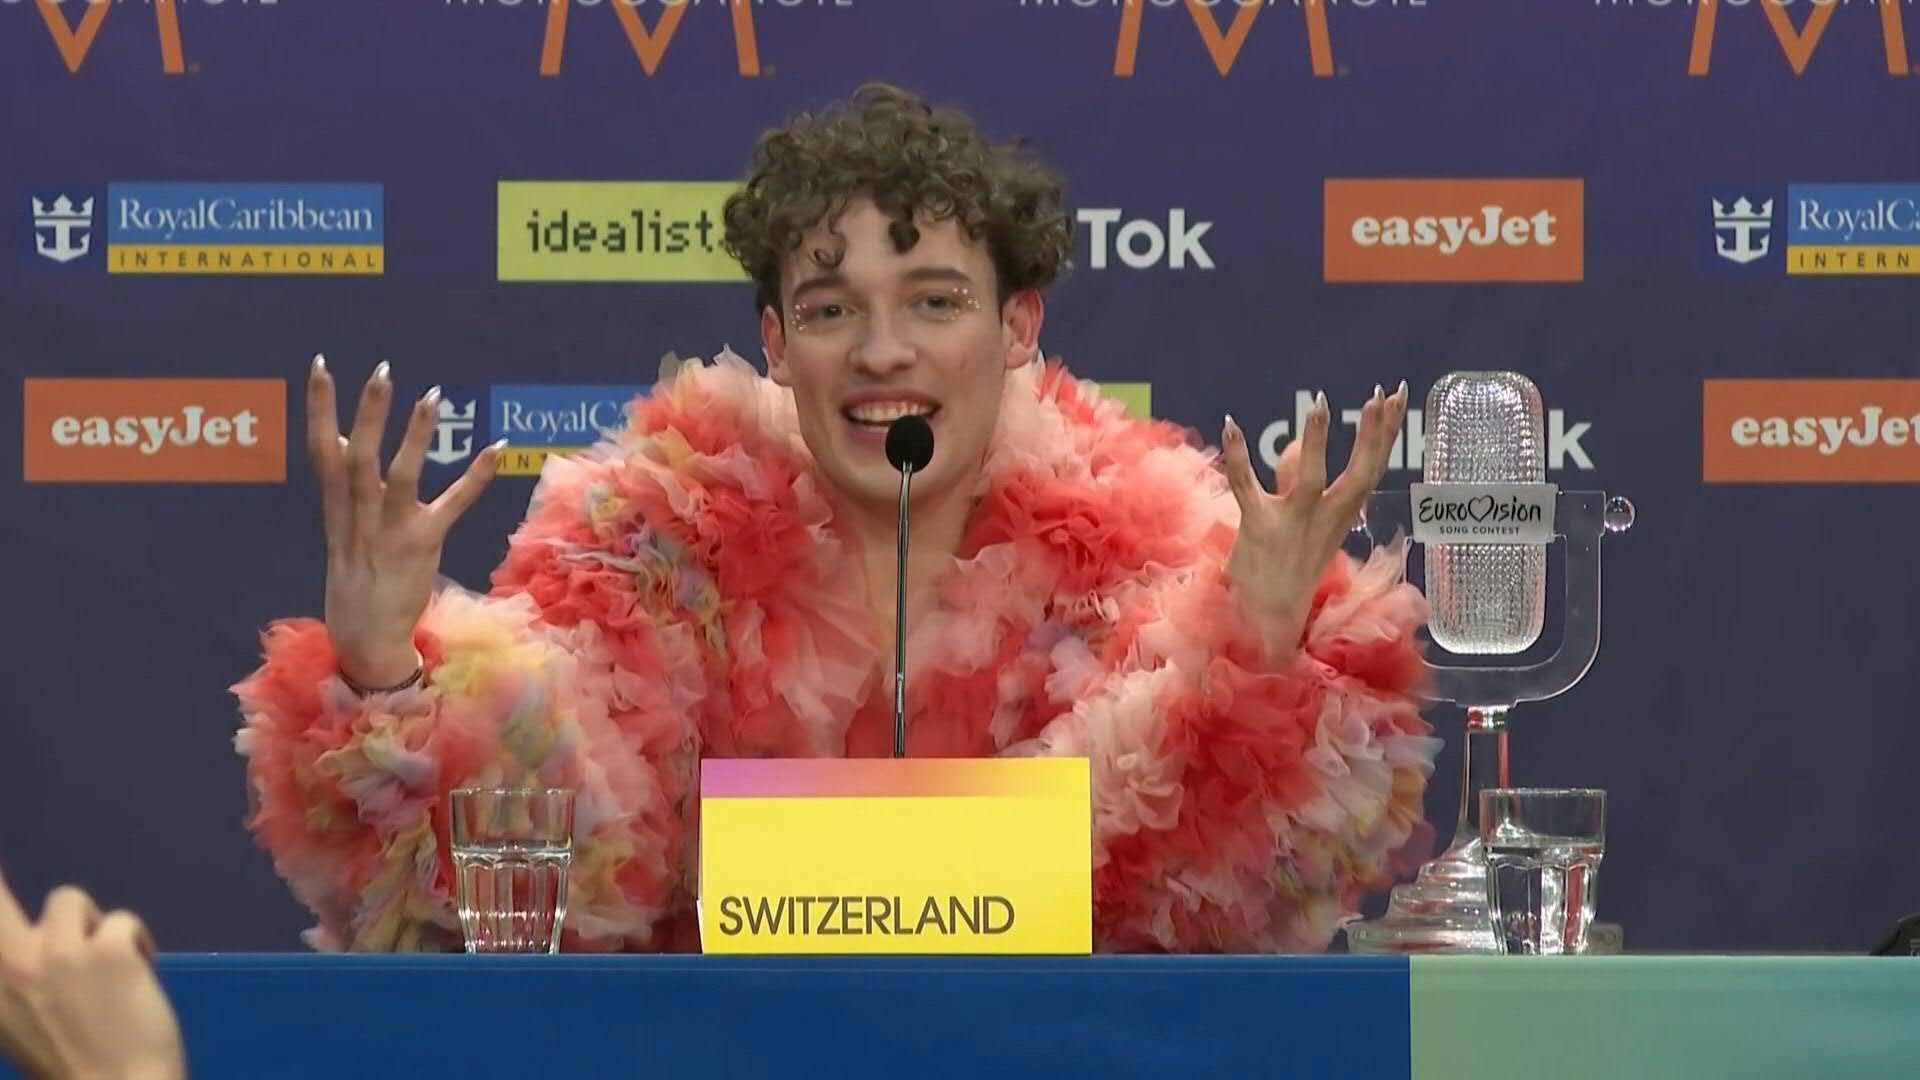 Switzerland’s Nemo wins Eurovision Song Contest